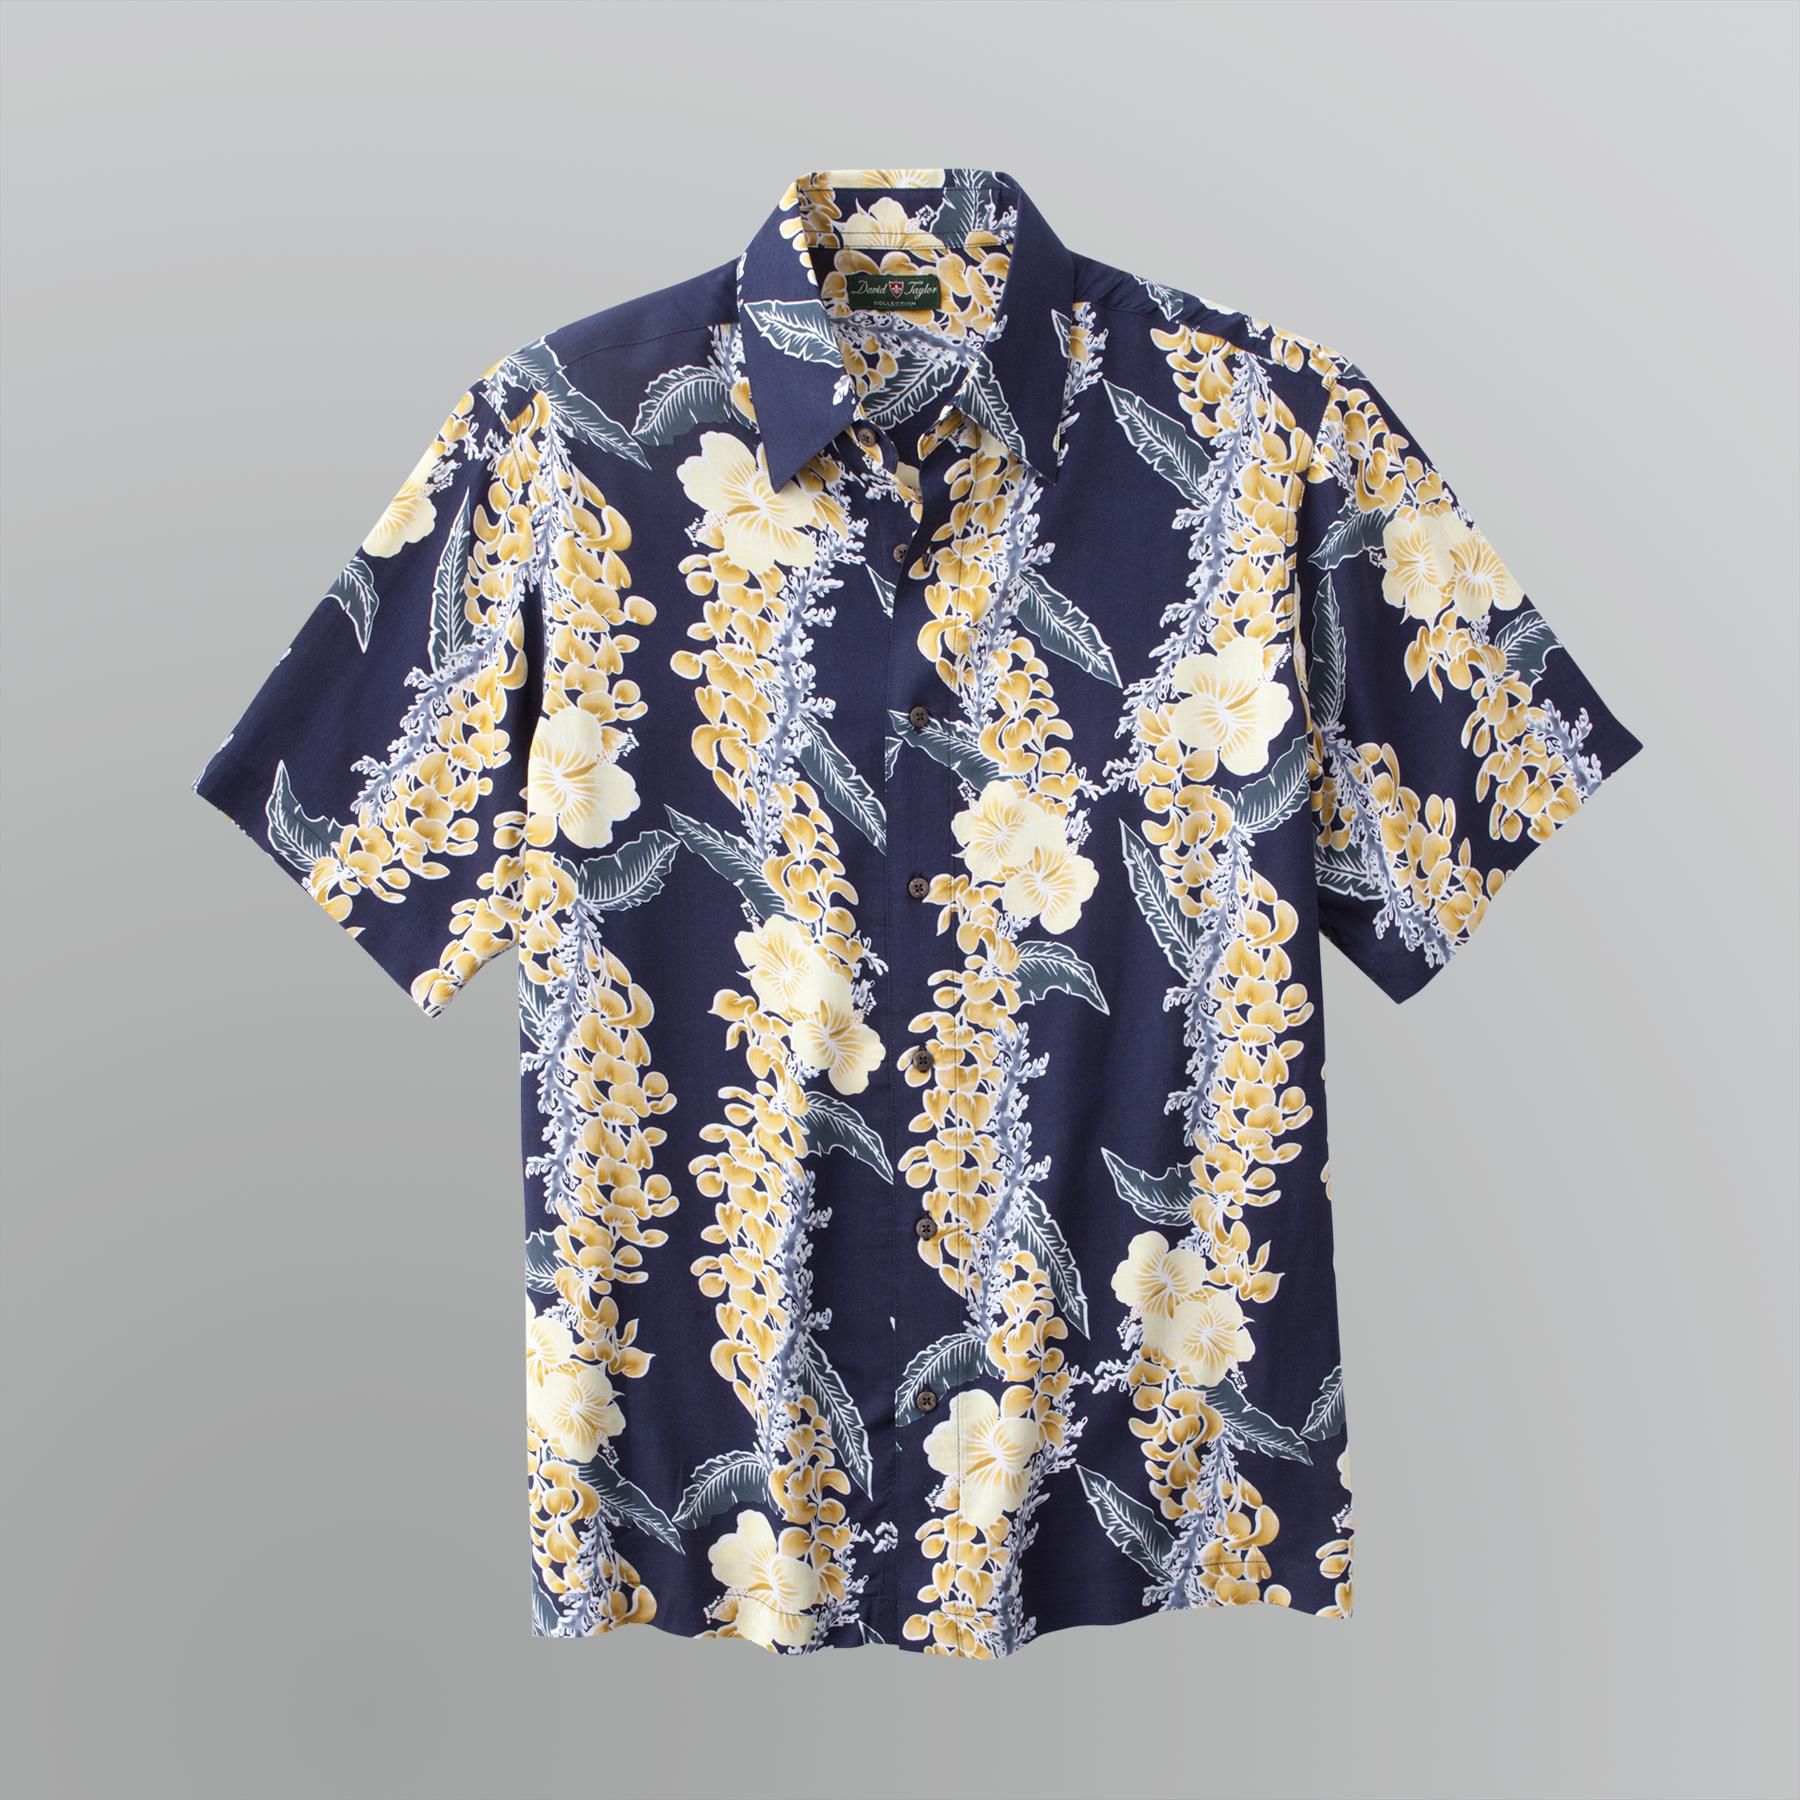 David Taylor Collection Men's Tropical Shirt